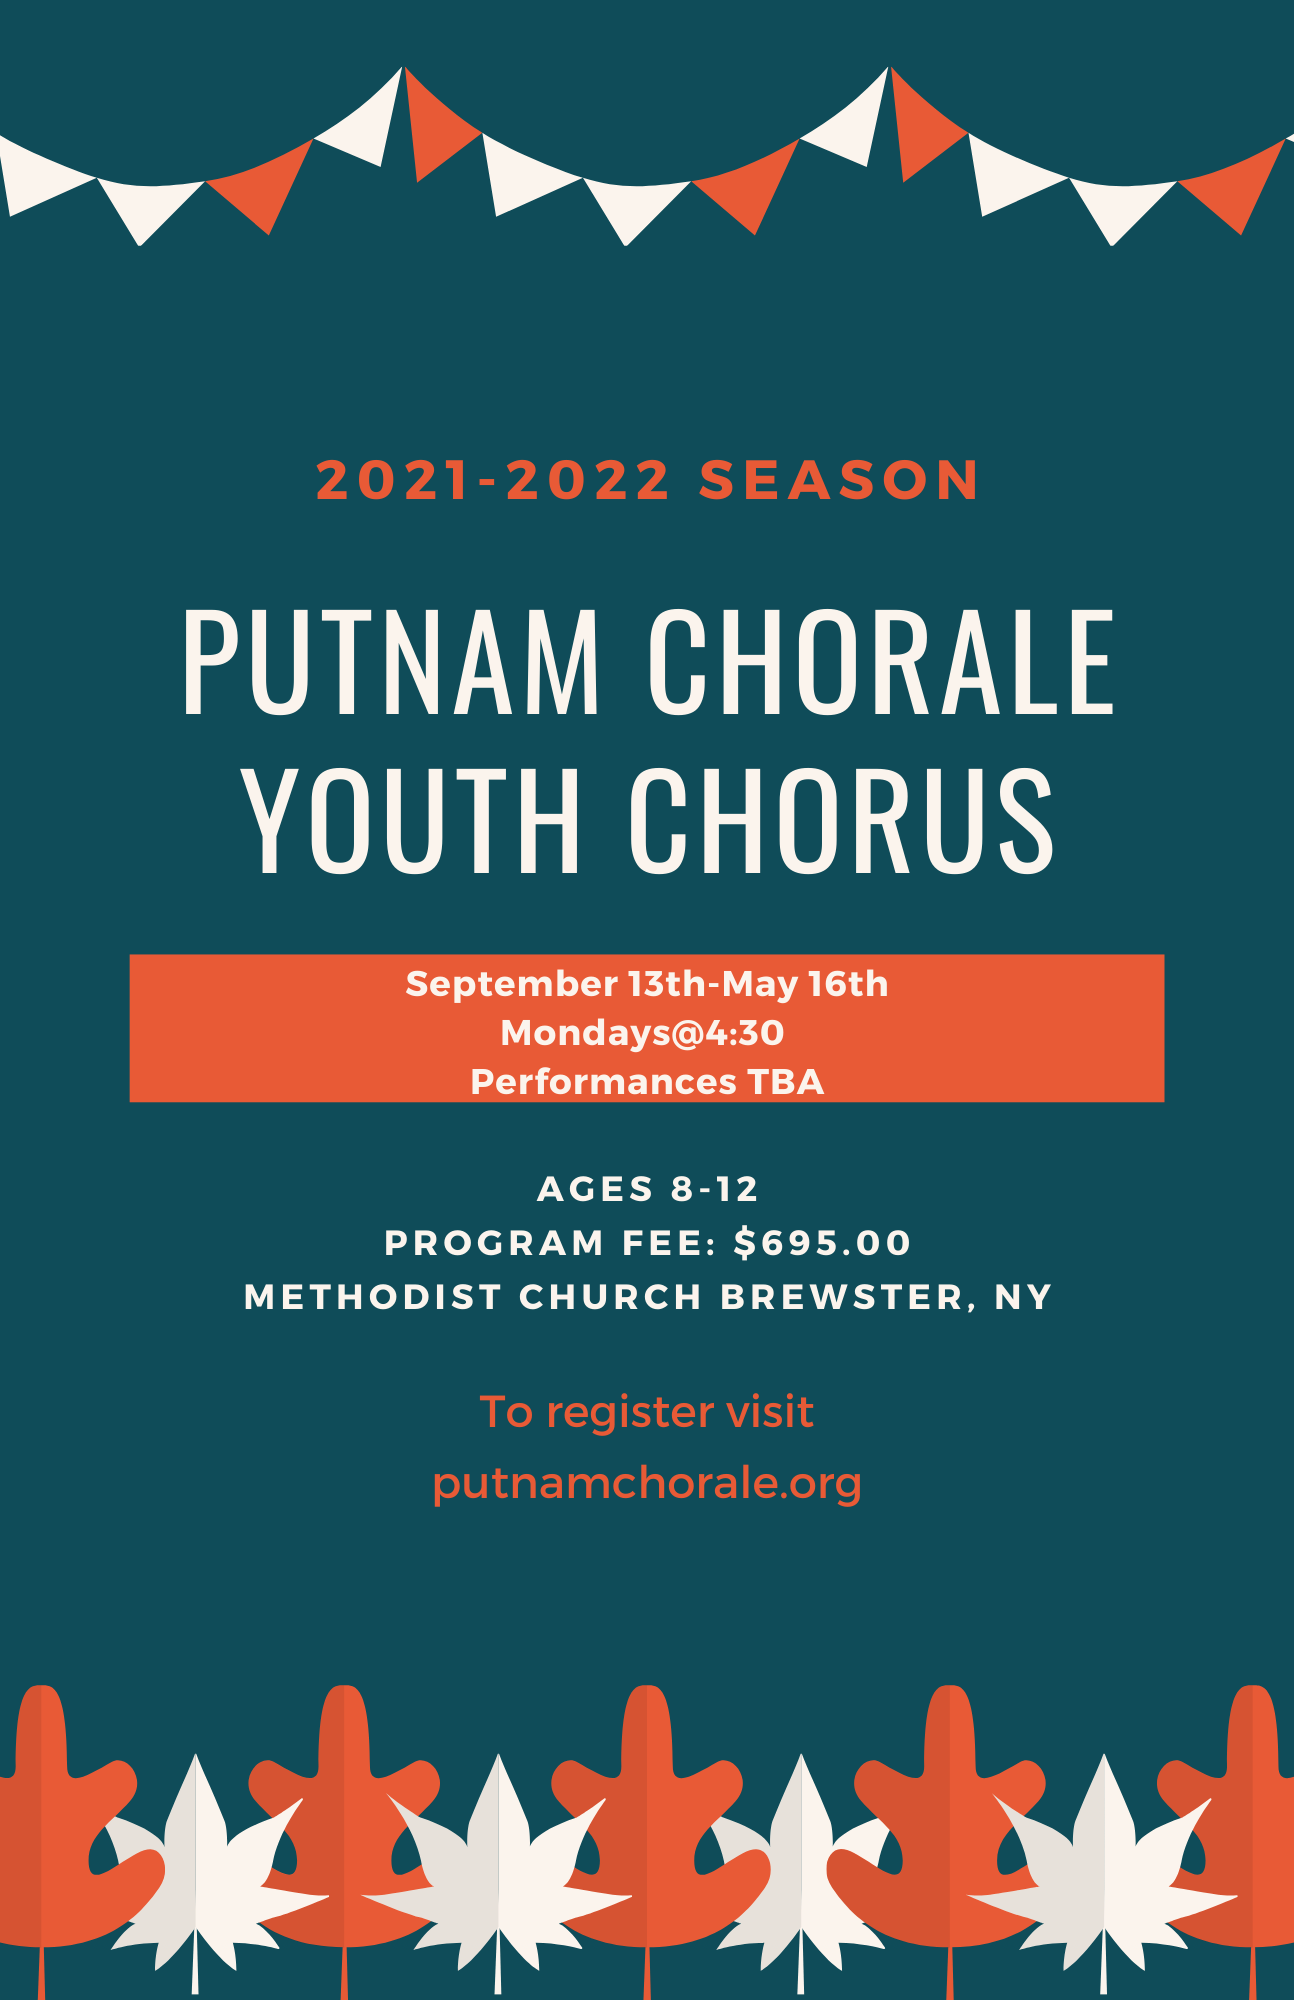 Registration: Putnam Chorale Youth Chorus 2021-22 Season